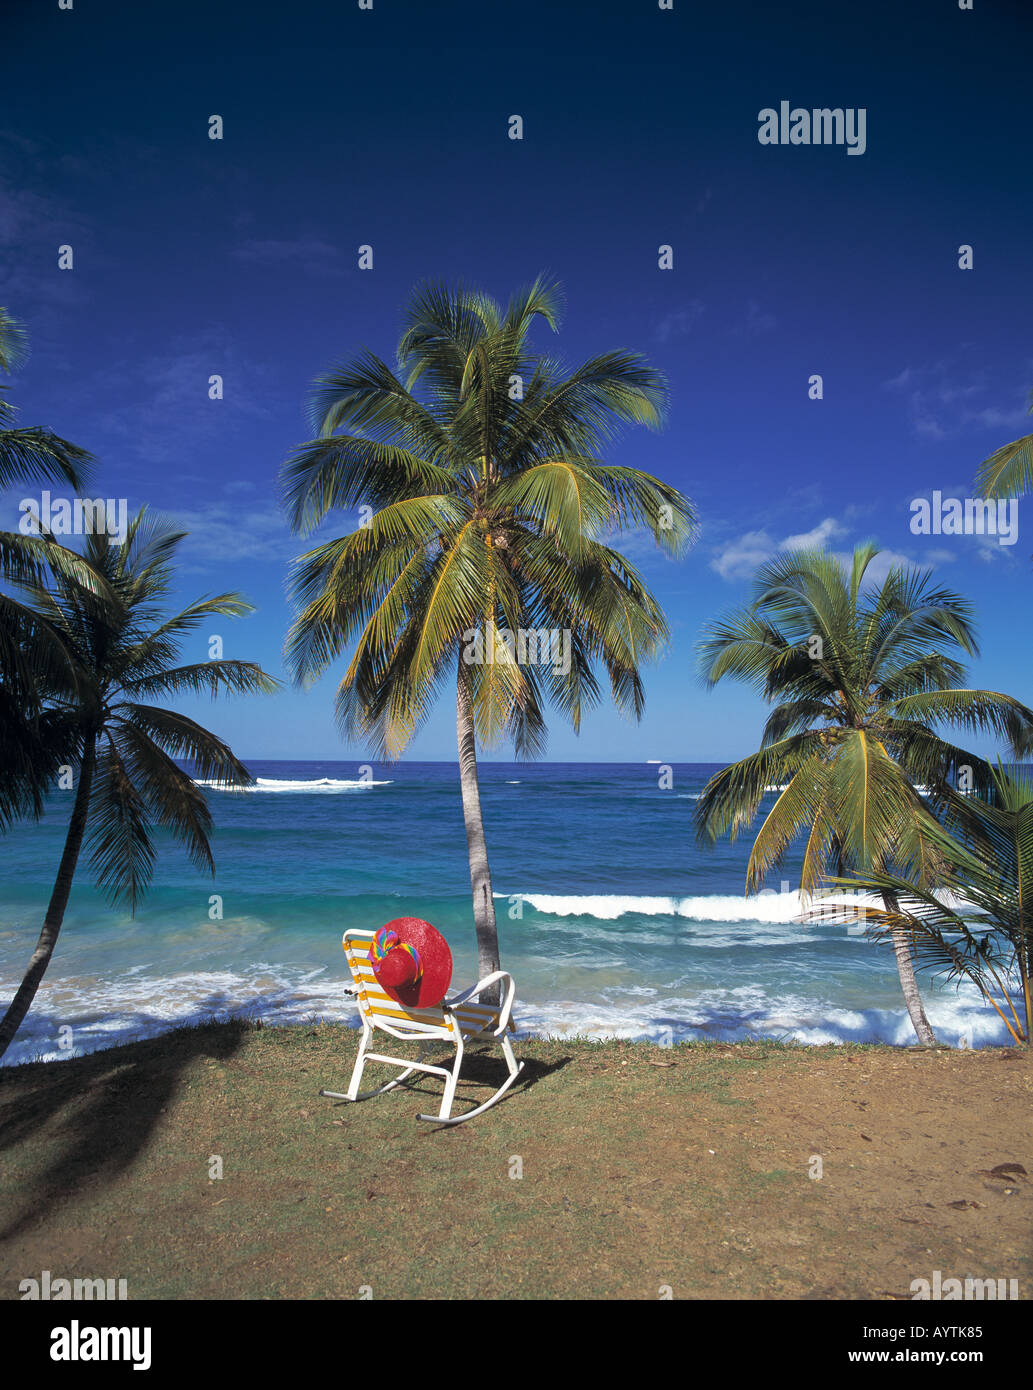 Freizeit, Traumurlaub, Stuhl mit Strohhut unter Palmen, Rio San Juan, Playa Preciosa, Karibik Dominikanische Republik, Banque D'Images